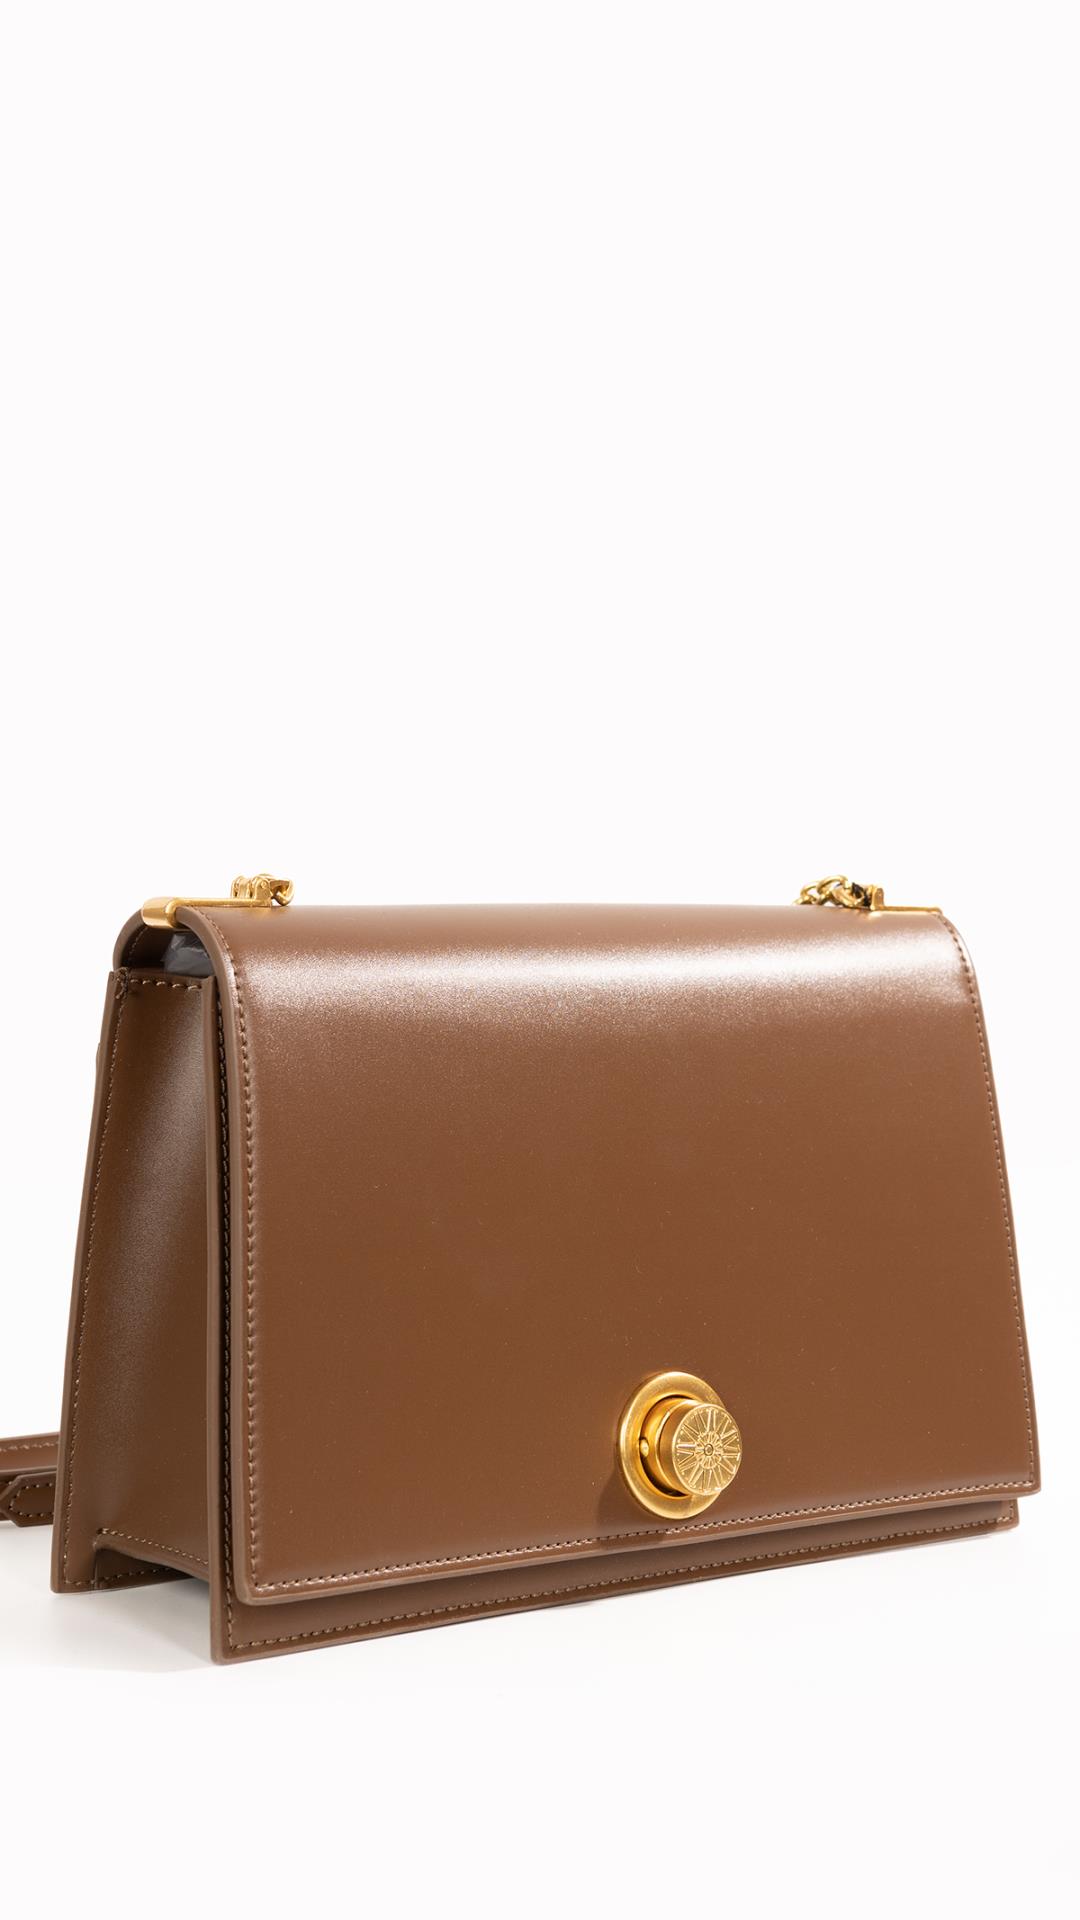 Square handbag with gold handle 